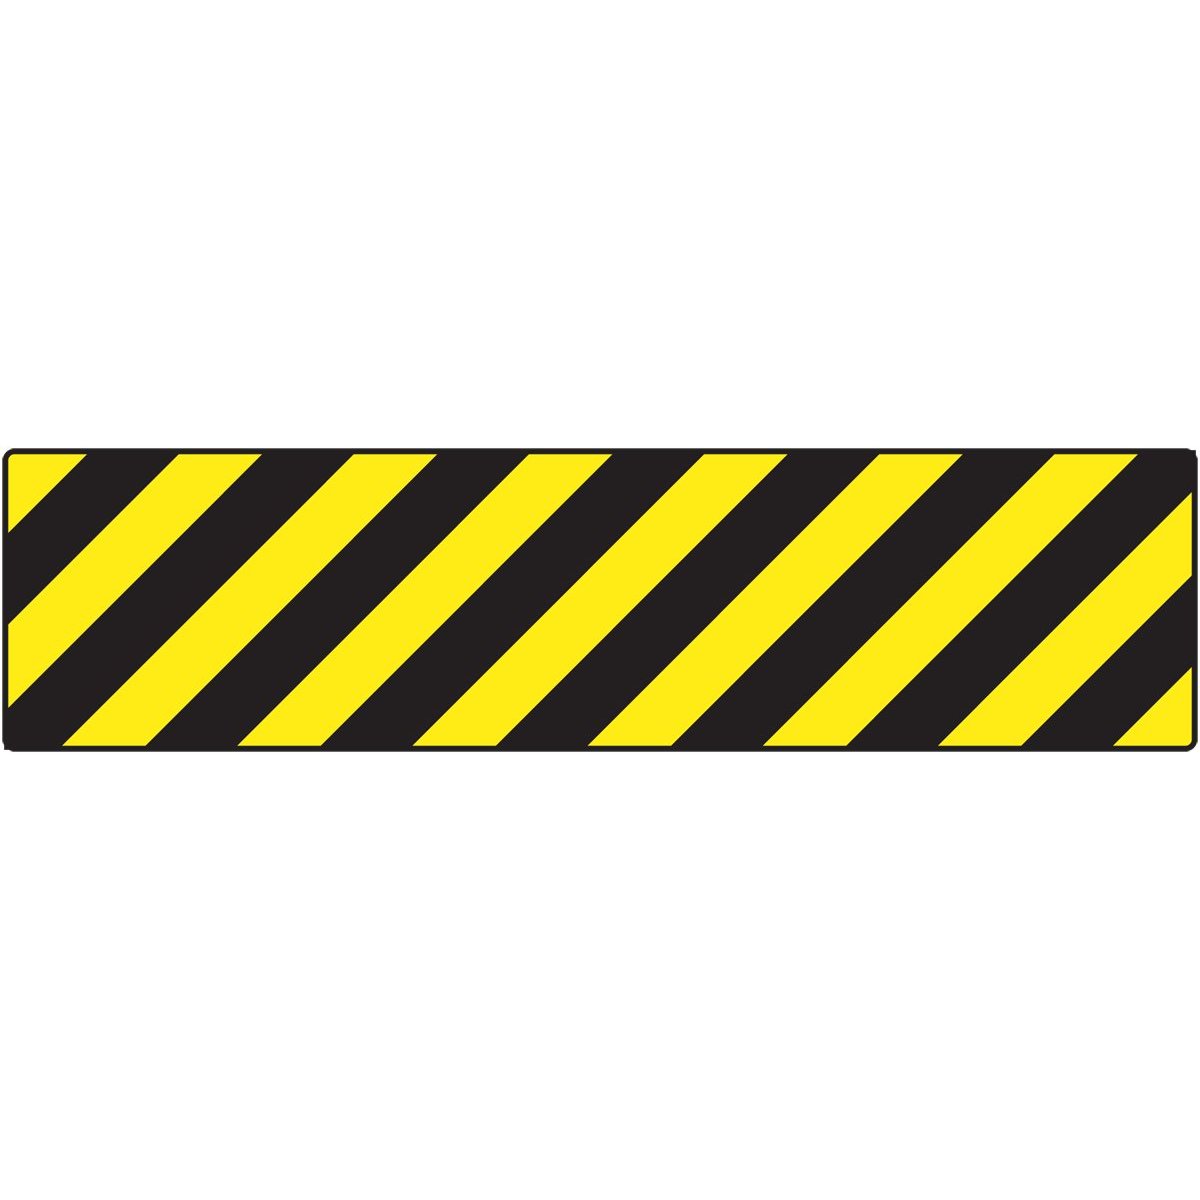 caution tape images